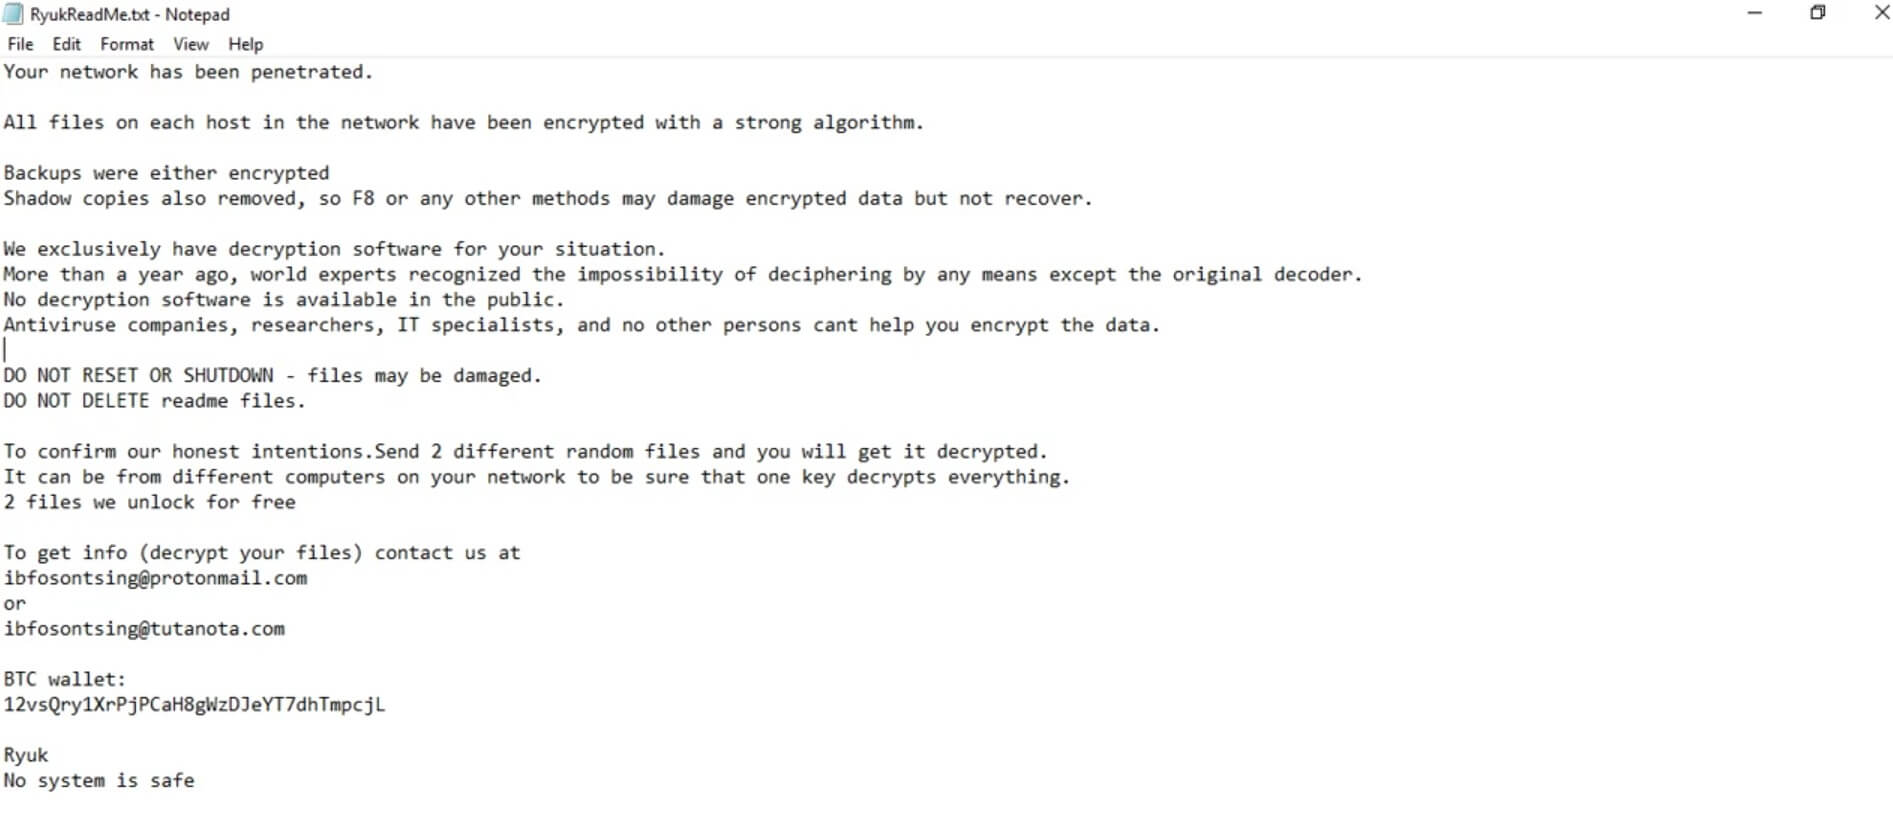 ryuk ransomware virus RYK extension ransom note